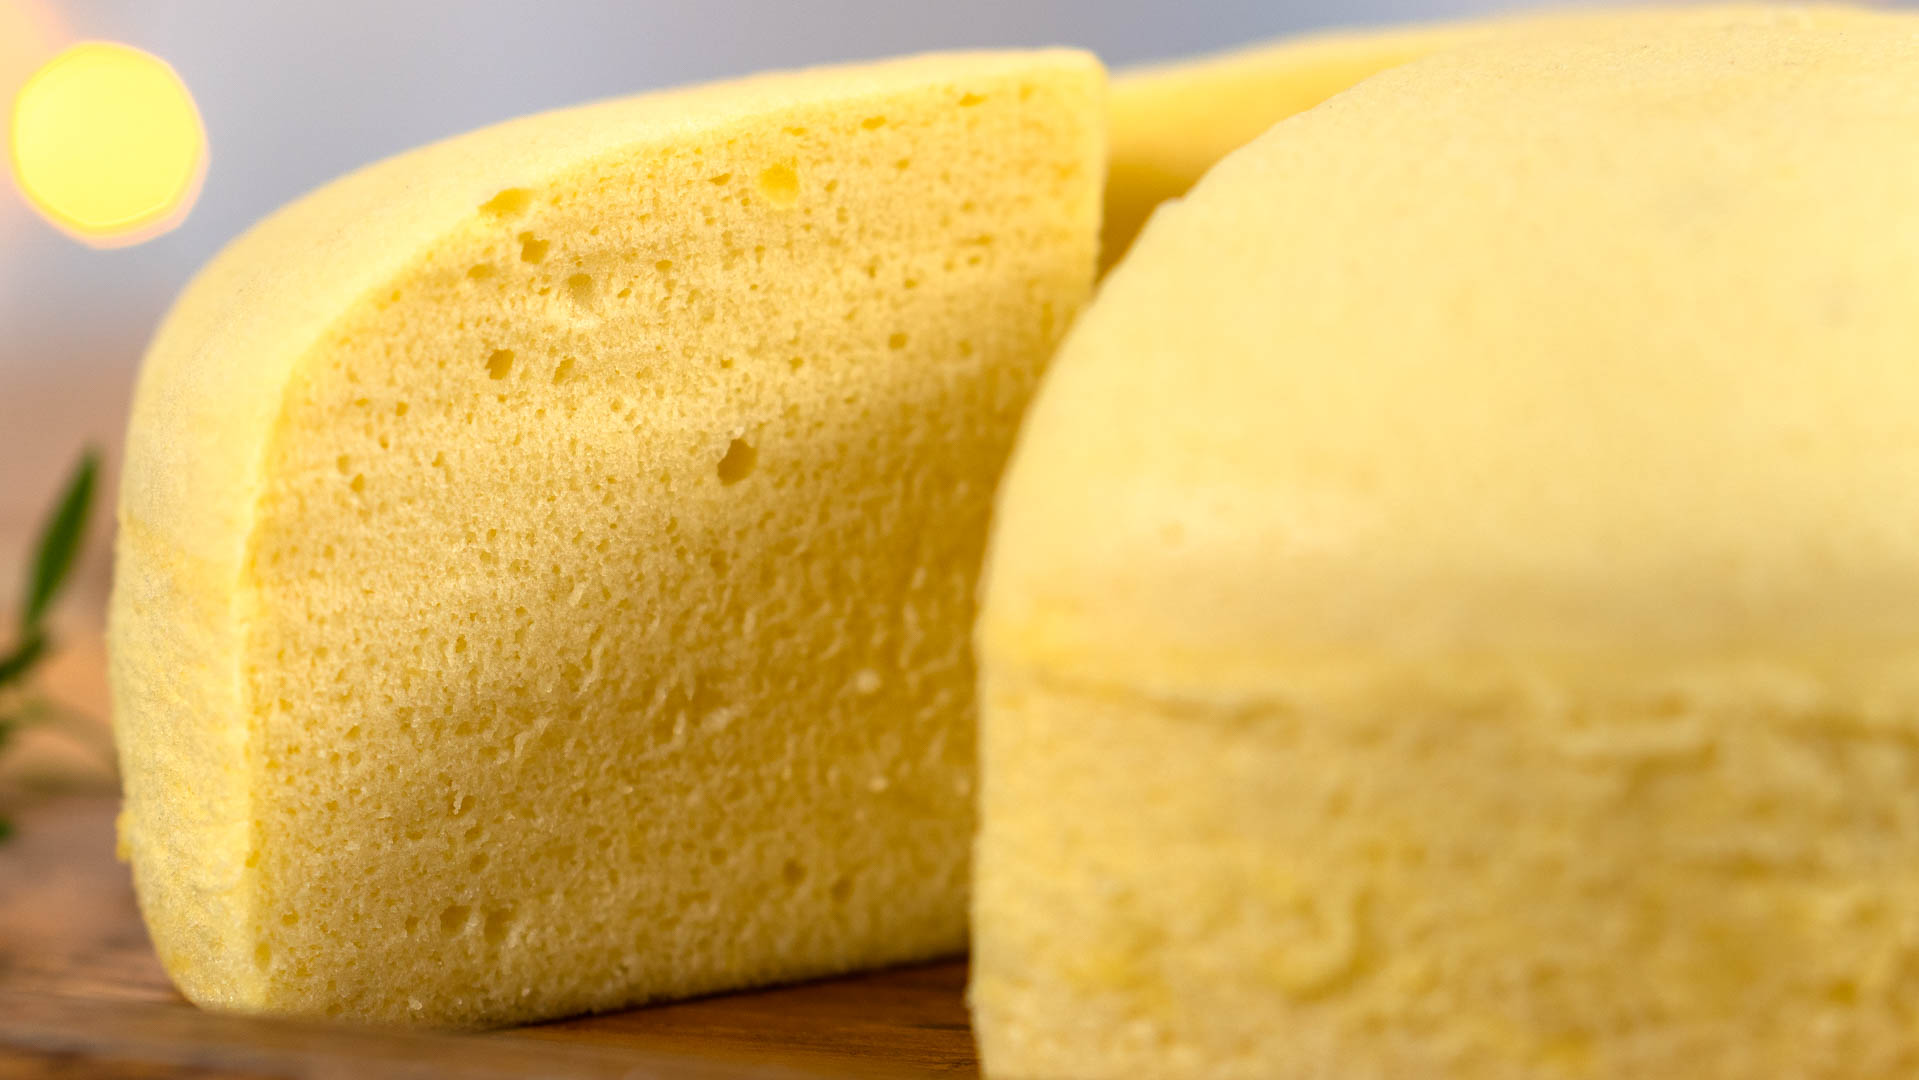 Malay sponge cake - Wikipedia